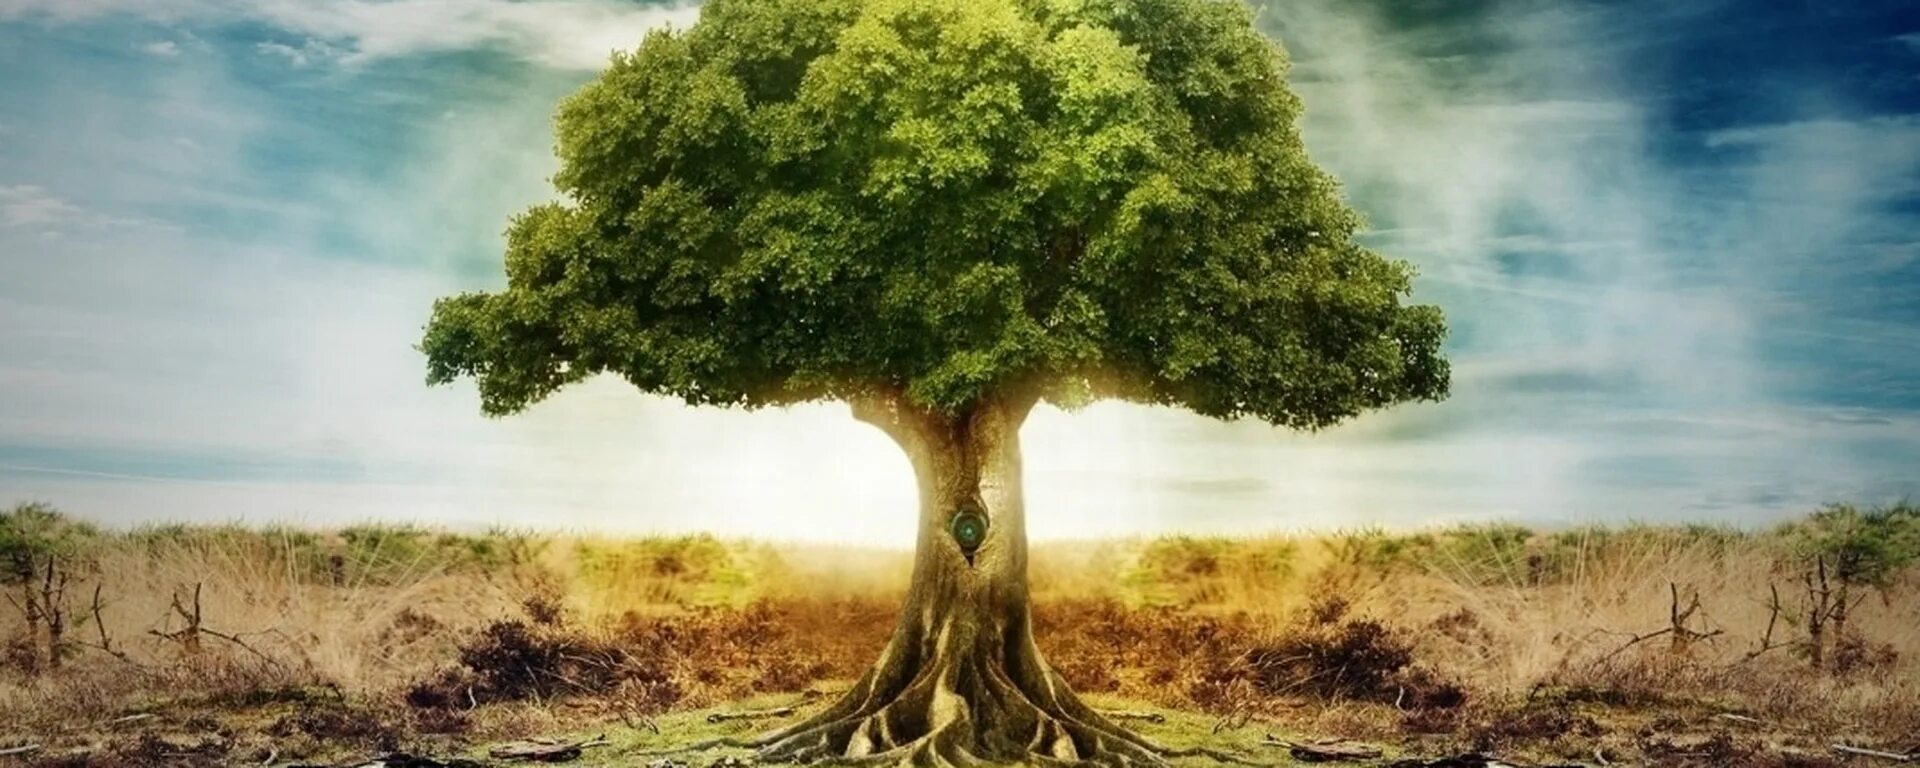 Дерево жизни дуб